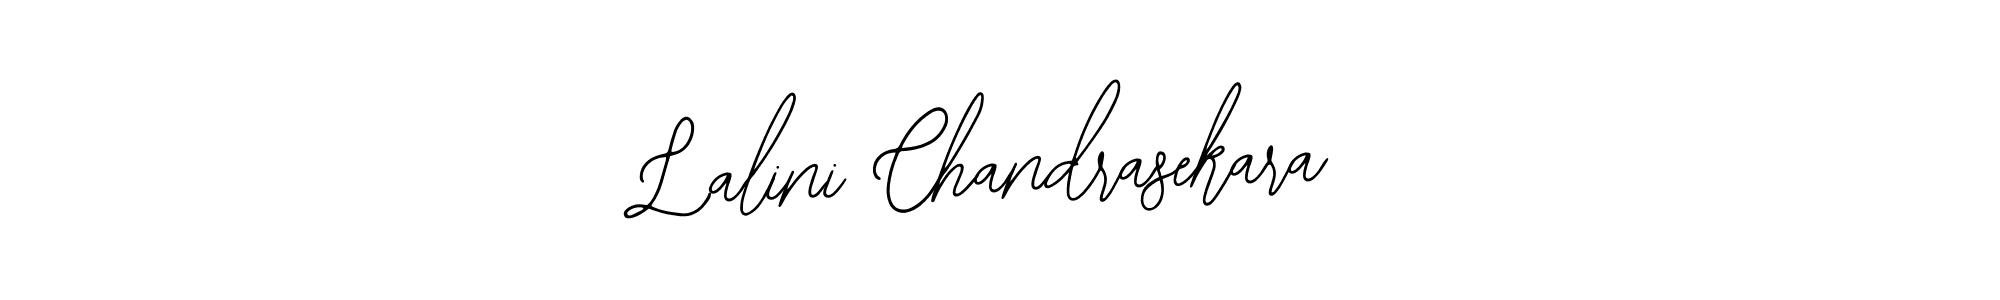 How to Draw Lalini Chandrasekara signature style? Bearetta-2O07w is a latest design signature styles for name Lalini Chandrasekara. Lalini Chandrasekara signature style 12 images and pictures png